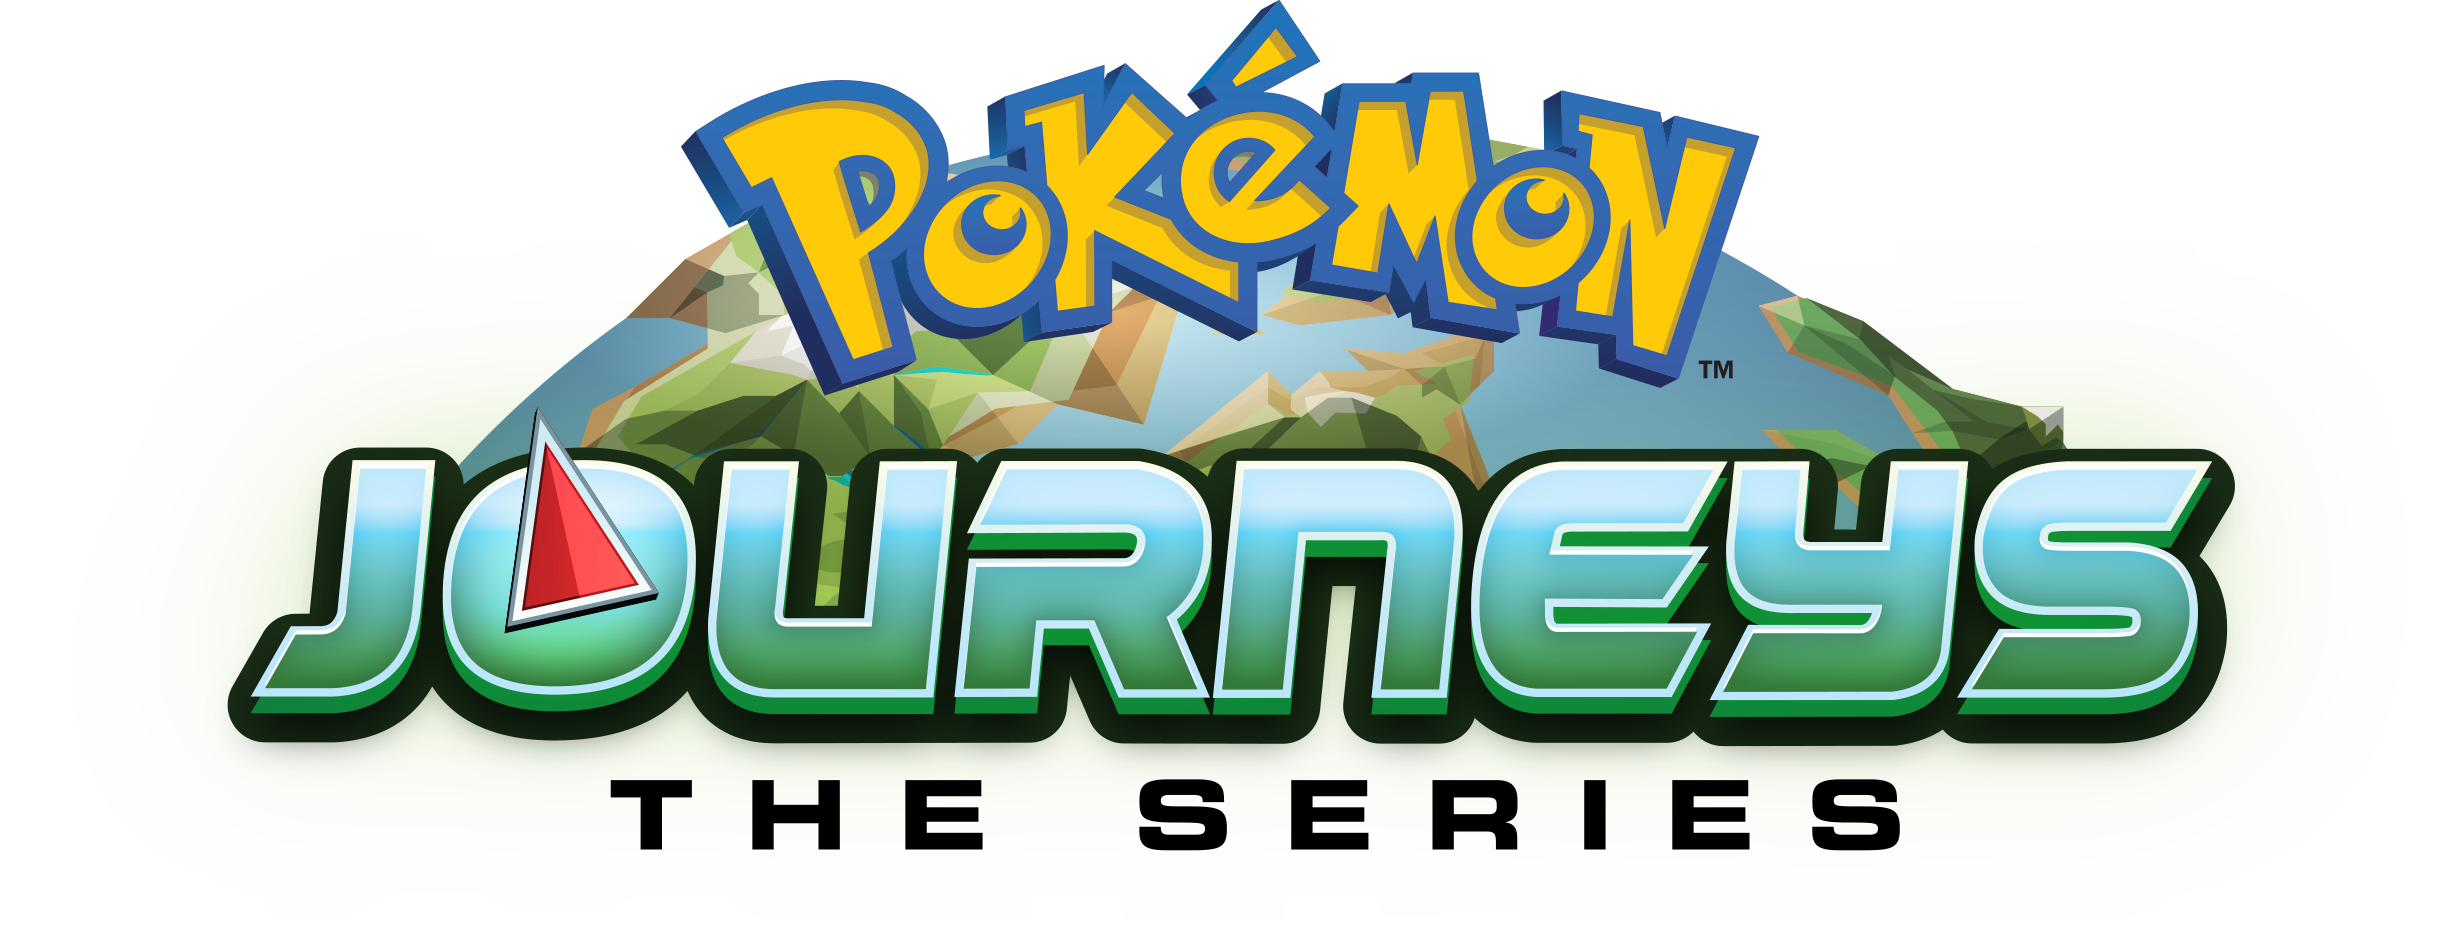 Pokémon Master Journeys: The Series - Wikipedia